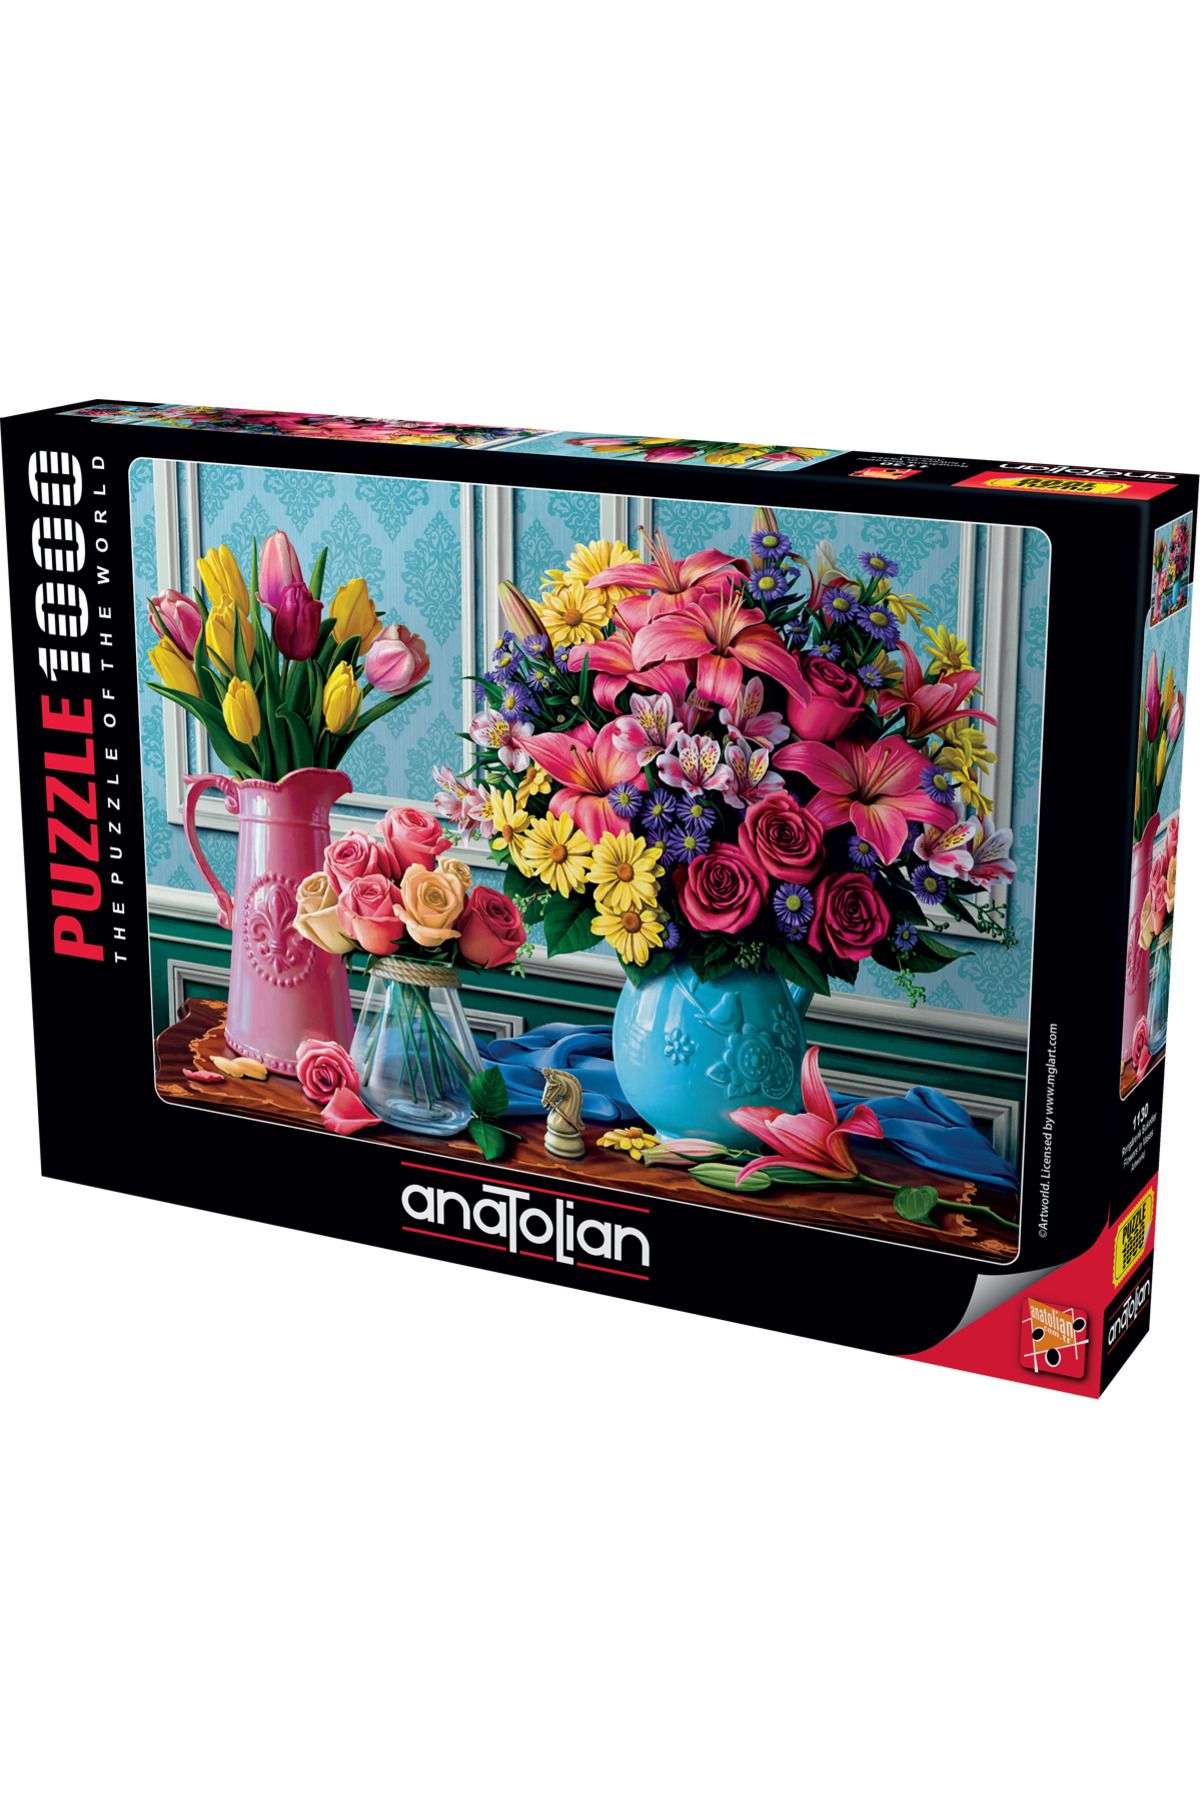 Anatolian Puzzle 1000 Parçalık Puzzle / Rengarenk Buketler - Kod:1130